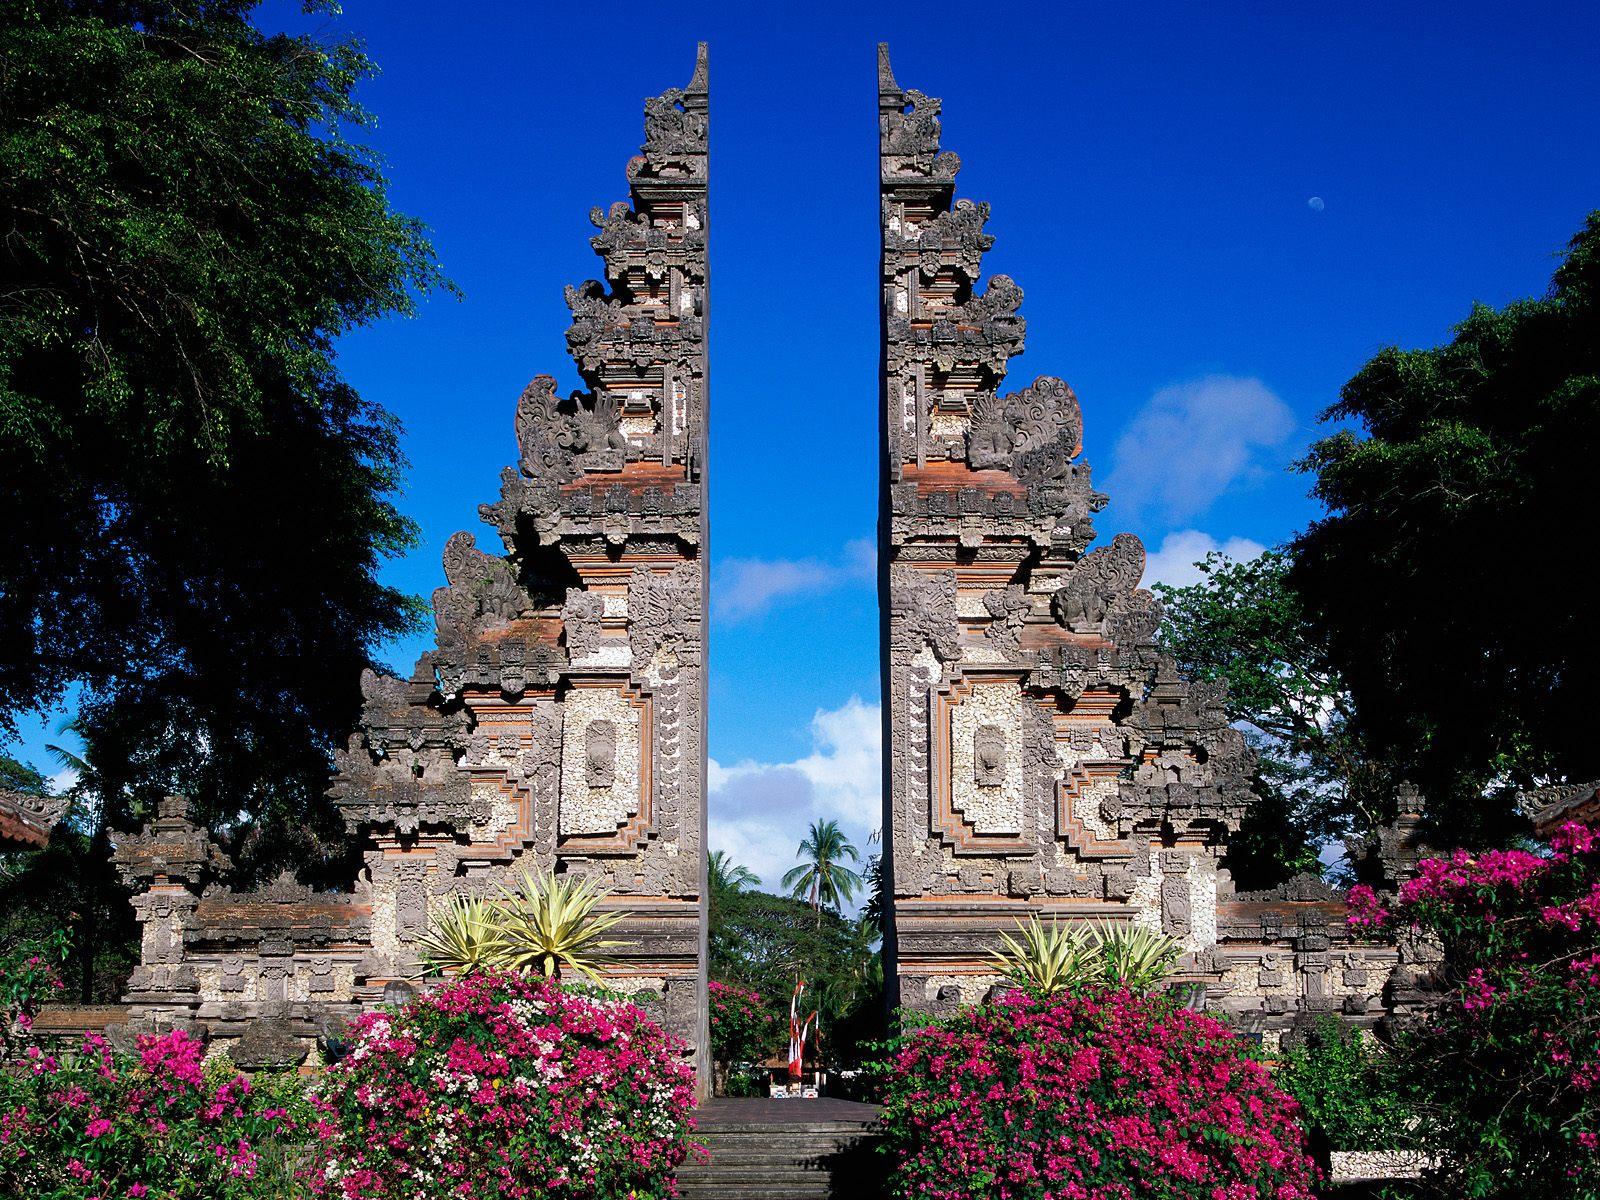 Bali monument wallpaper. Bali monument